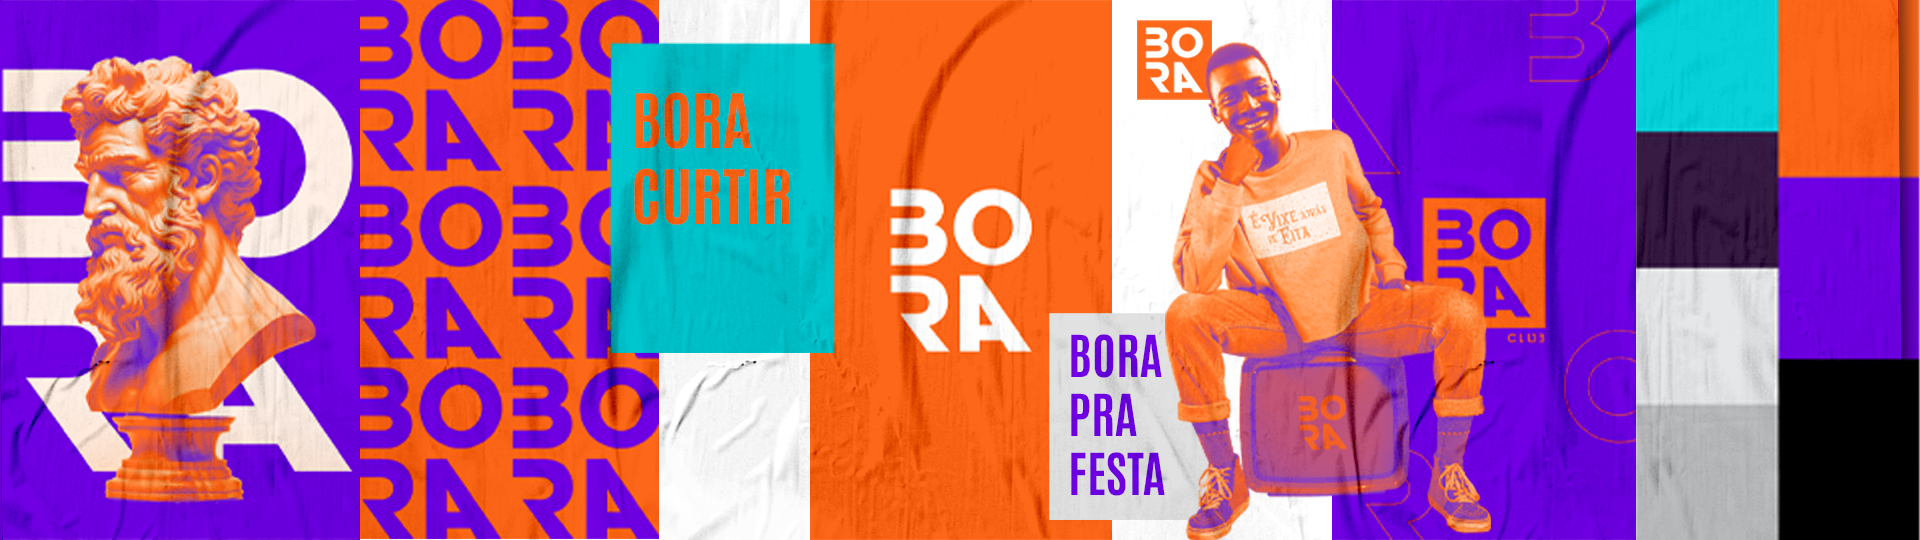 Banner-Bora-01